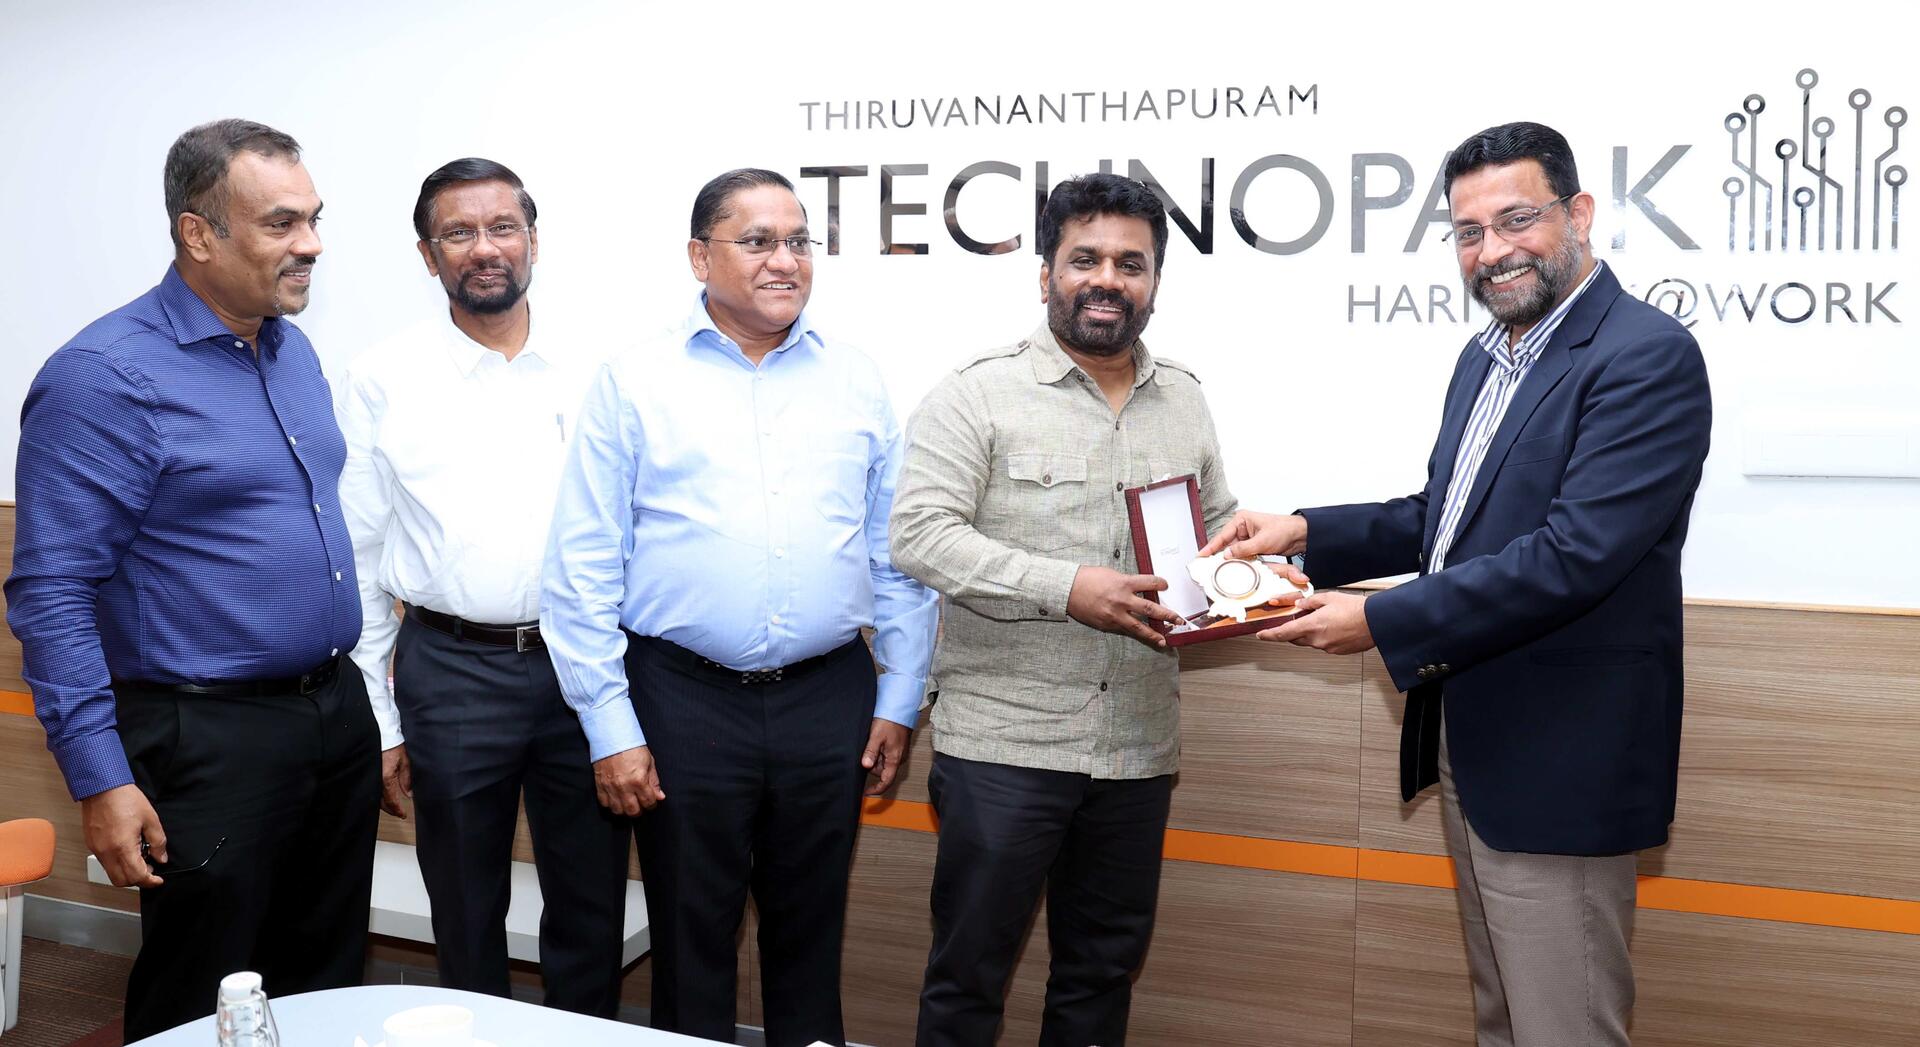 Sri Lanka can take a cue from Technopark’s growth: MP Shri Anura Kumara Dissanayaka, Hon'ble MP of Sri Lanka leads delegation to Technopark